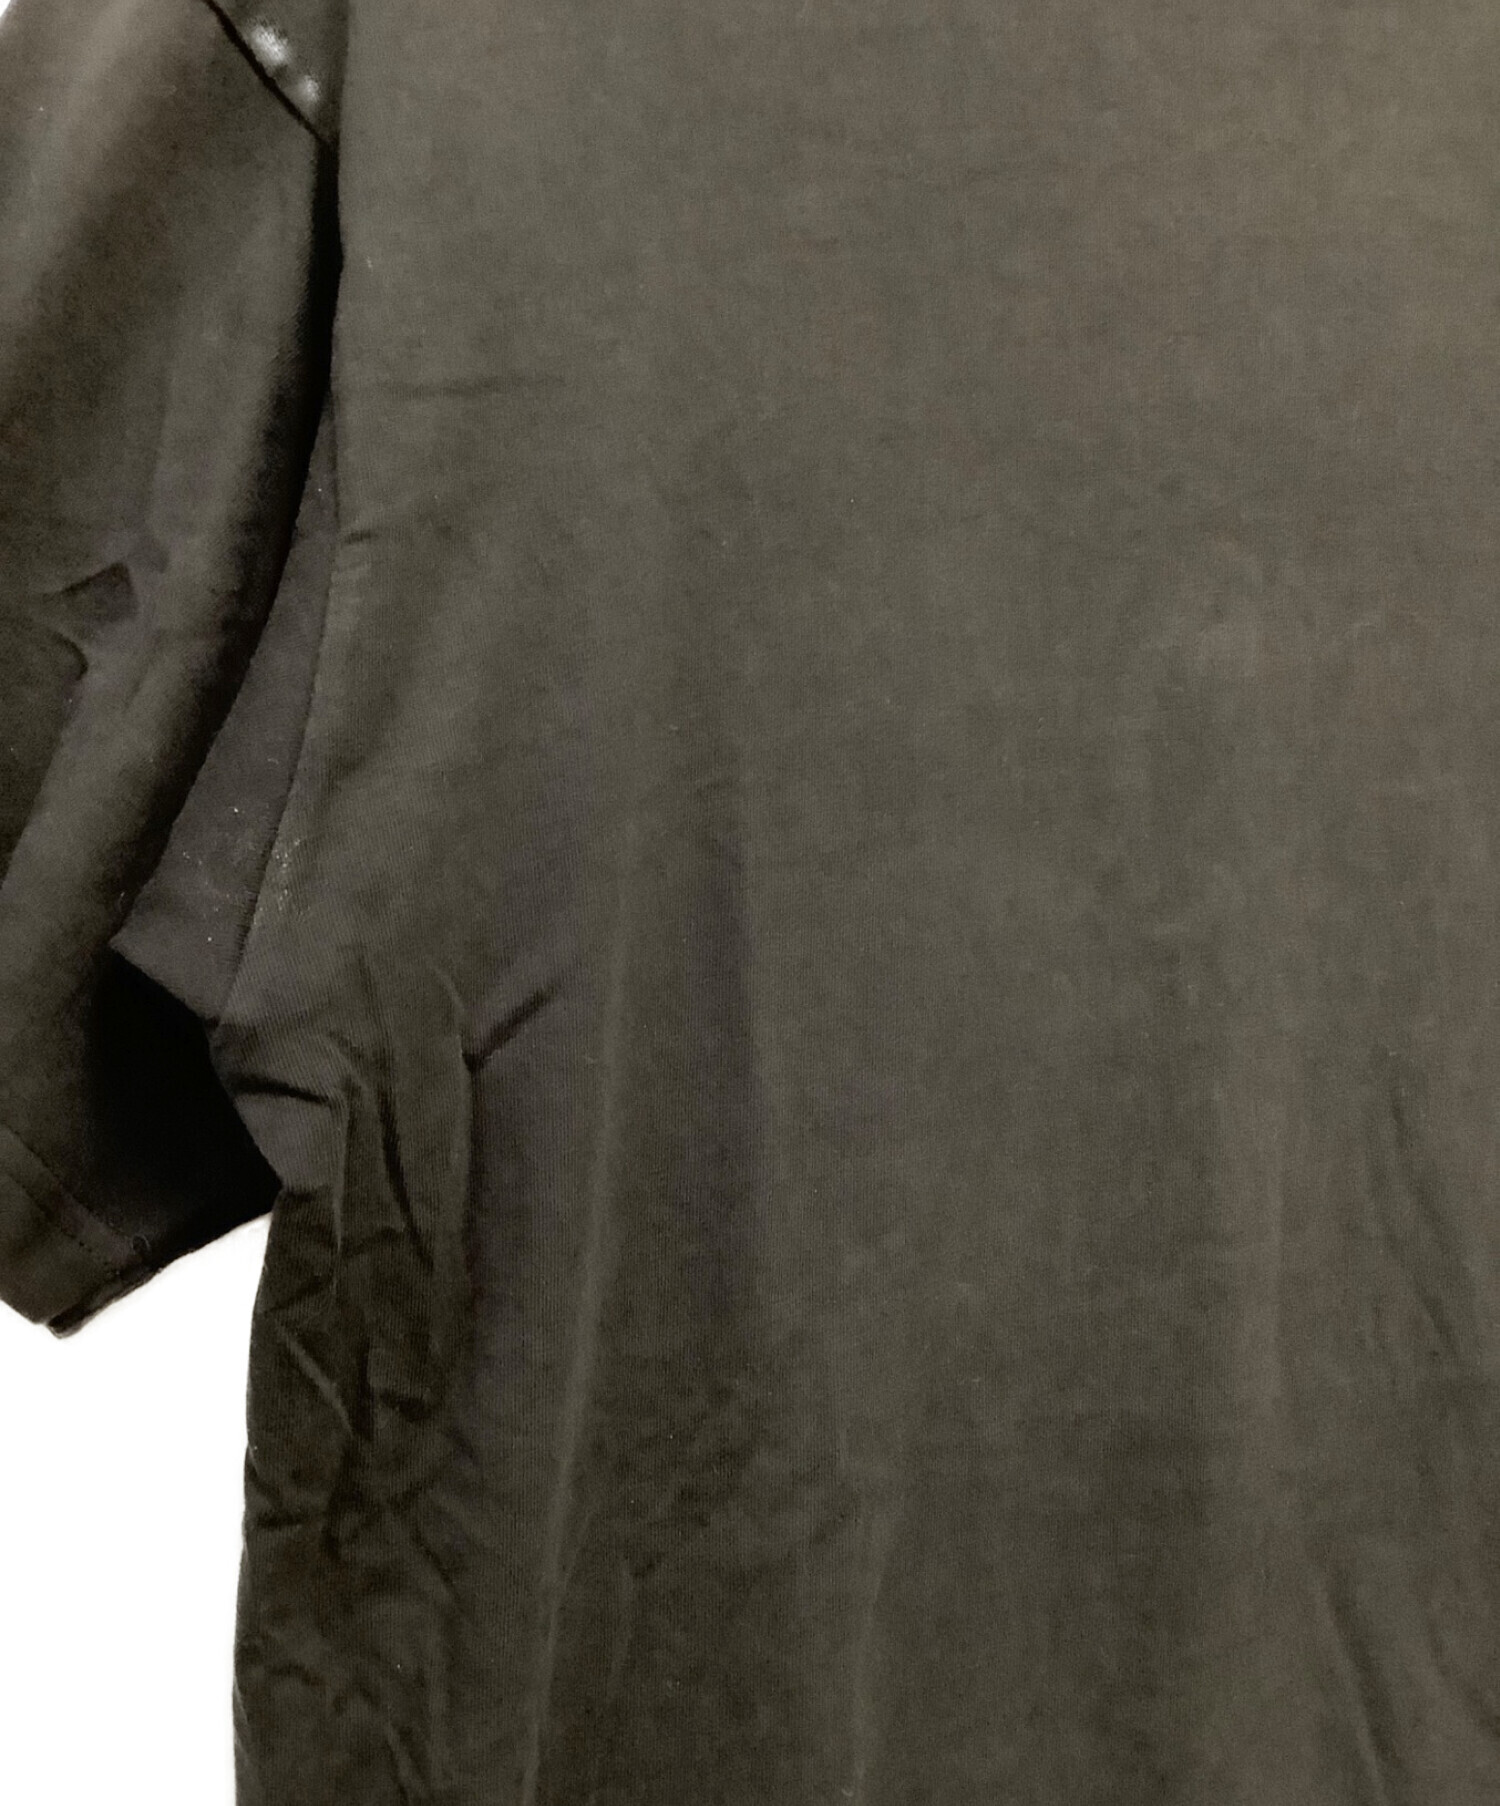 BALENCIAGA (バレンシアガ) キャンペーンロゴTシャツ ブラック サイズ:XS